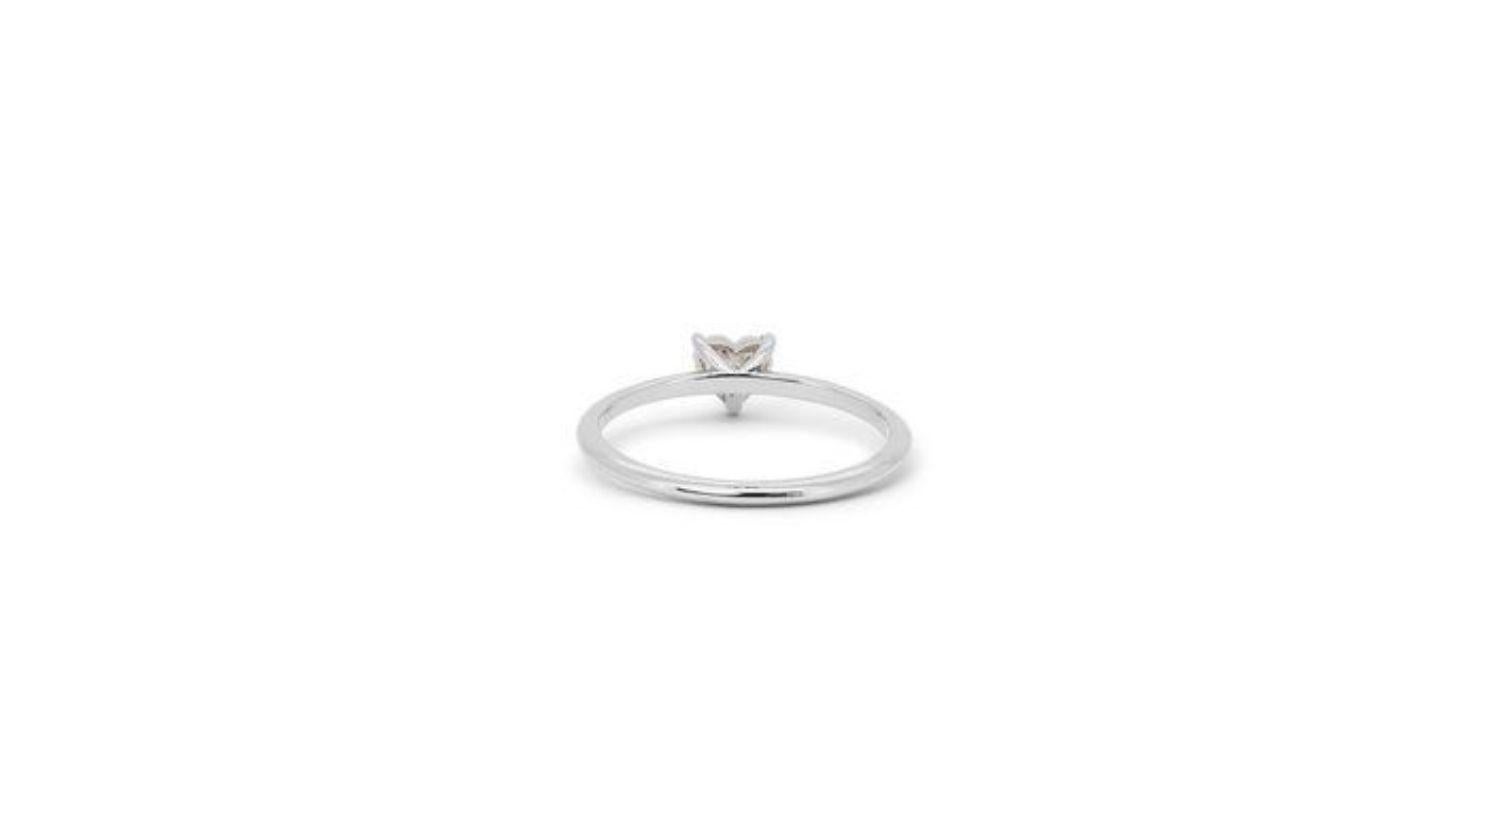 Mesmerizing 0.70ct Heart Brilliant Diamond Ring set in 18K White Gold For Sale 1